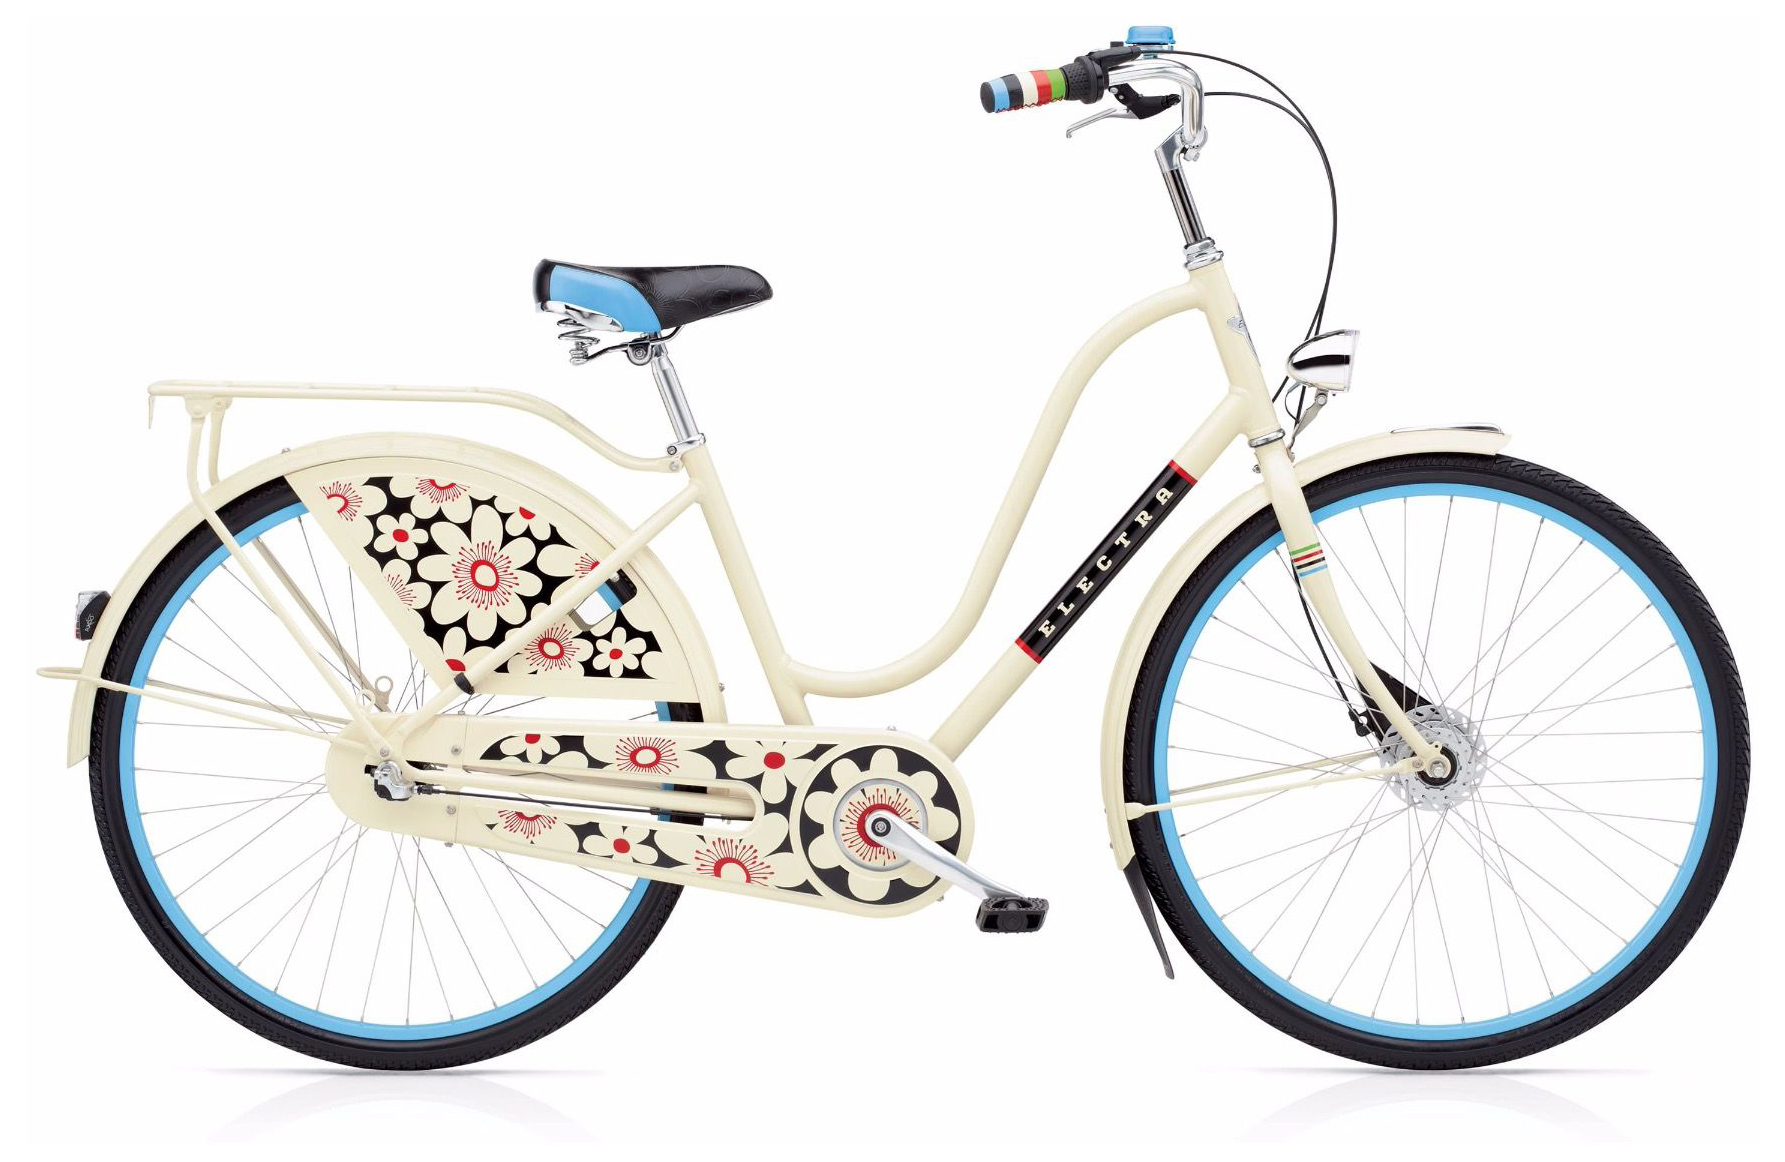  Отзывы о Женском велосипеде Electra Amsterdam Fashion 3i Bloom Ladies 2019